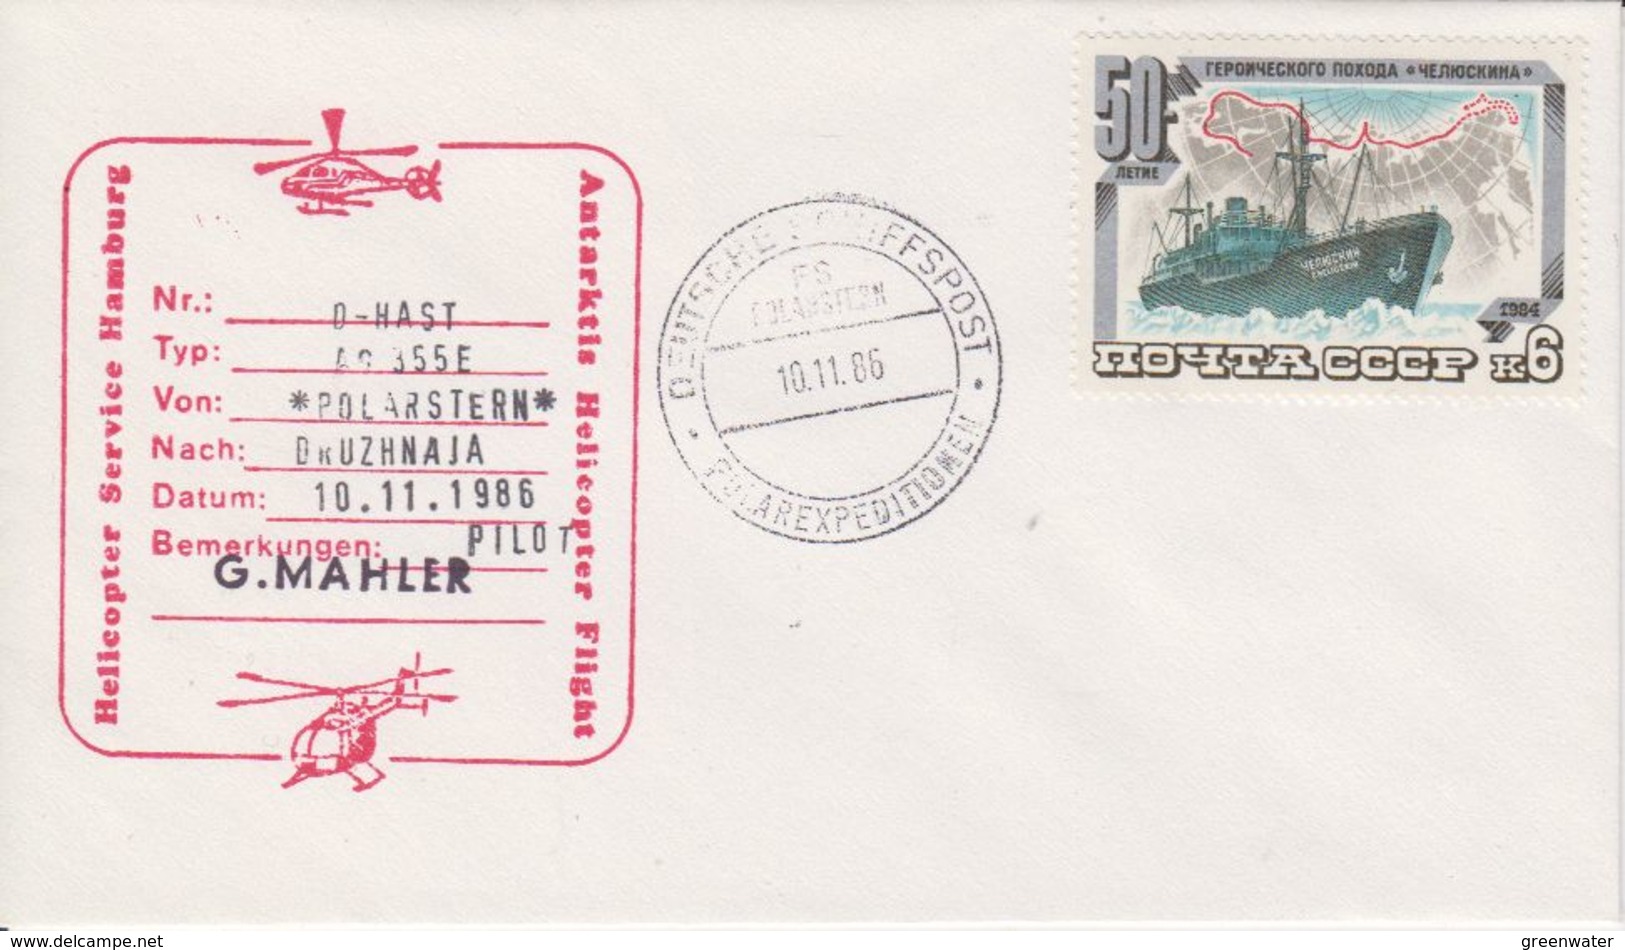 Russia 1986 Heliflight From Polarstern To Base Druzhnaja 10.11.86 Cover (41917) - Polar Flights